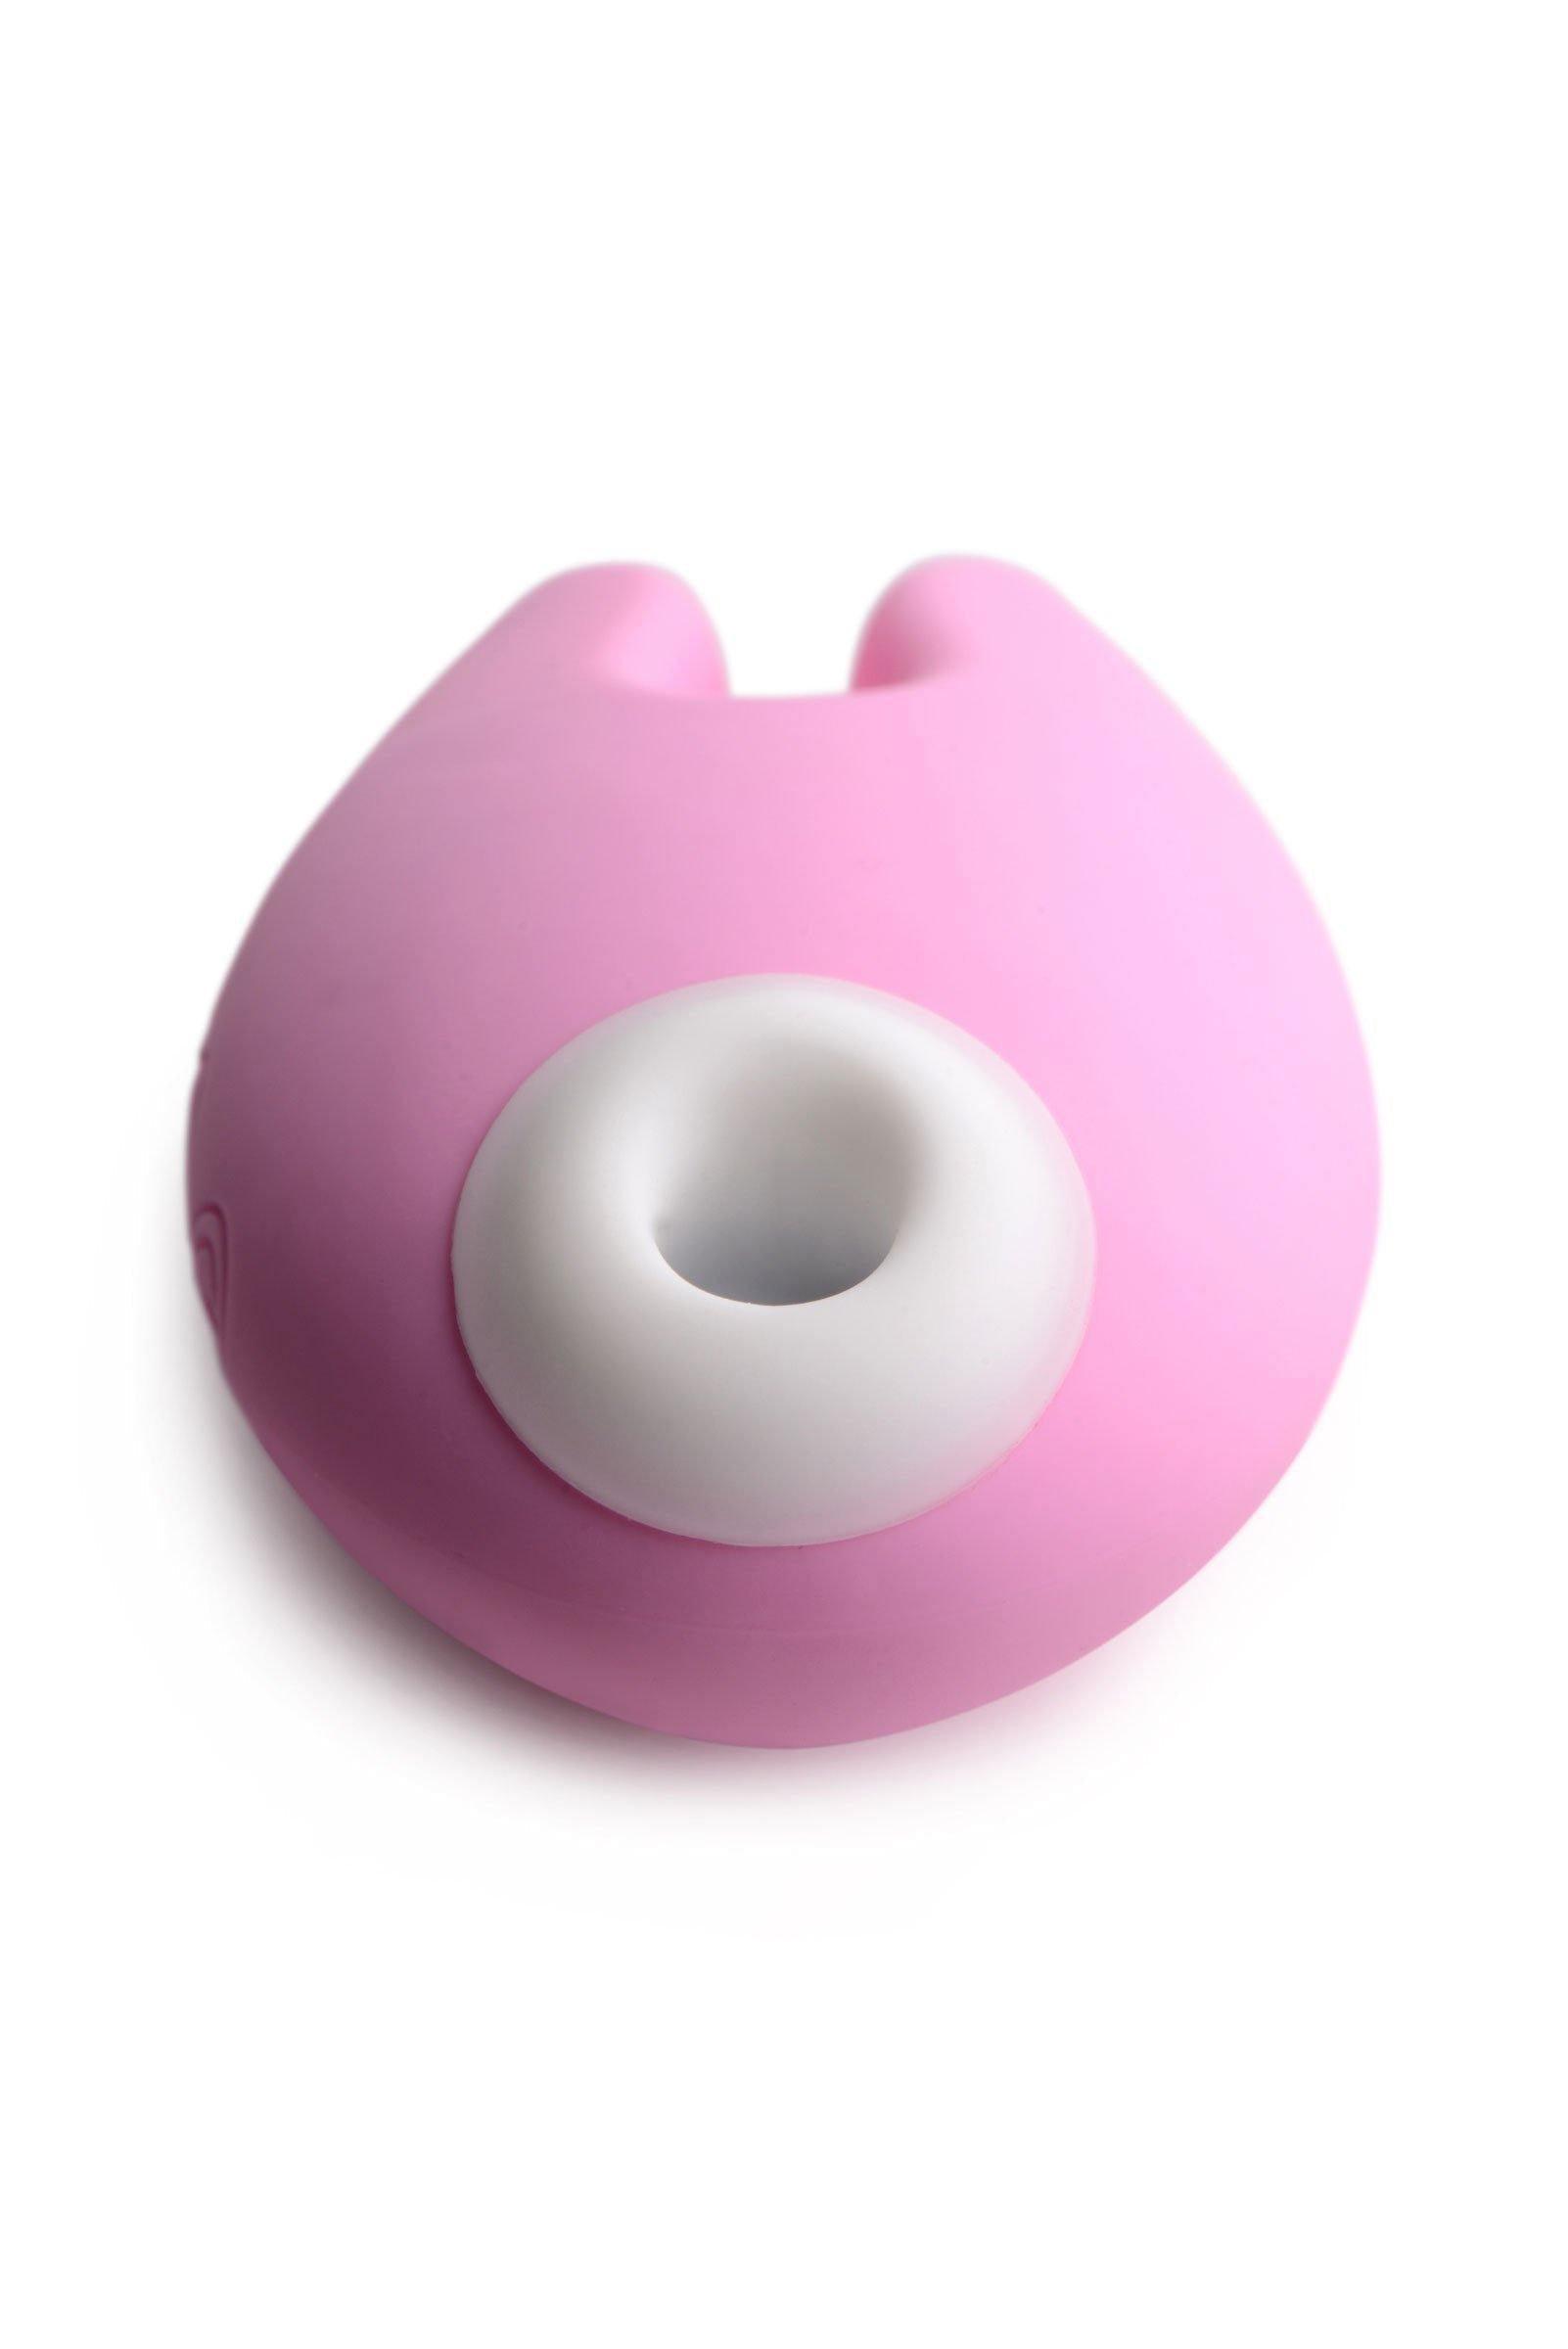 Sucky Bunny Silicone Clitoral Stimulator - Pink - My Sex Toy Hub